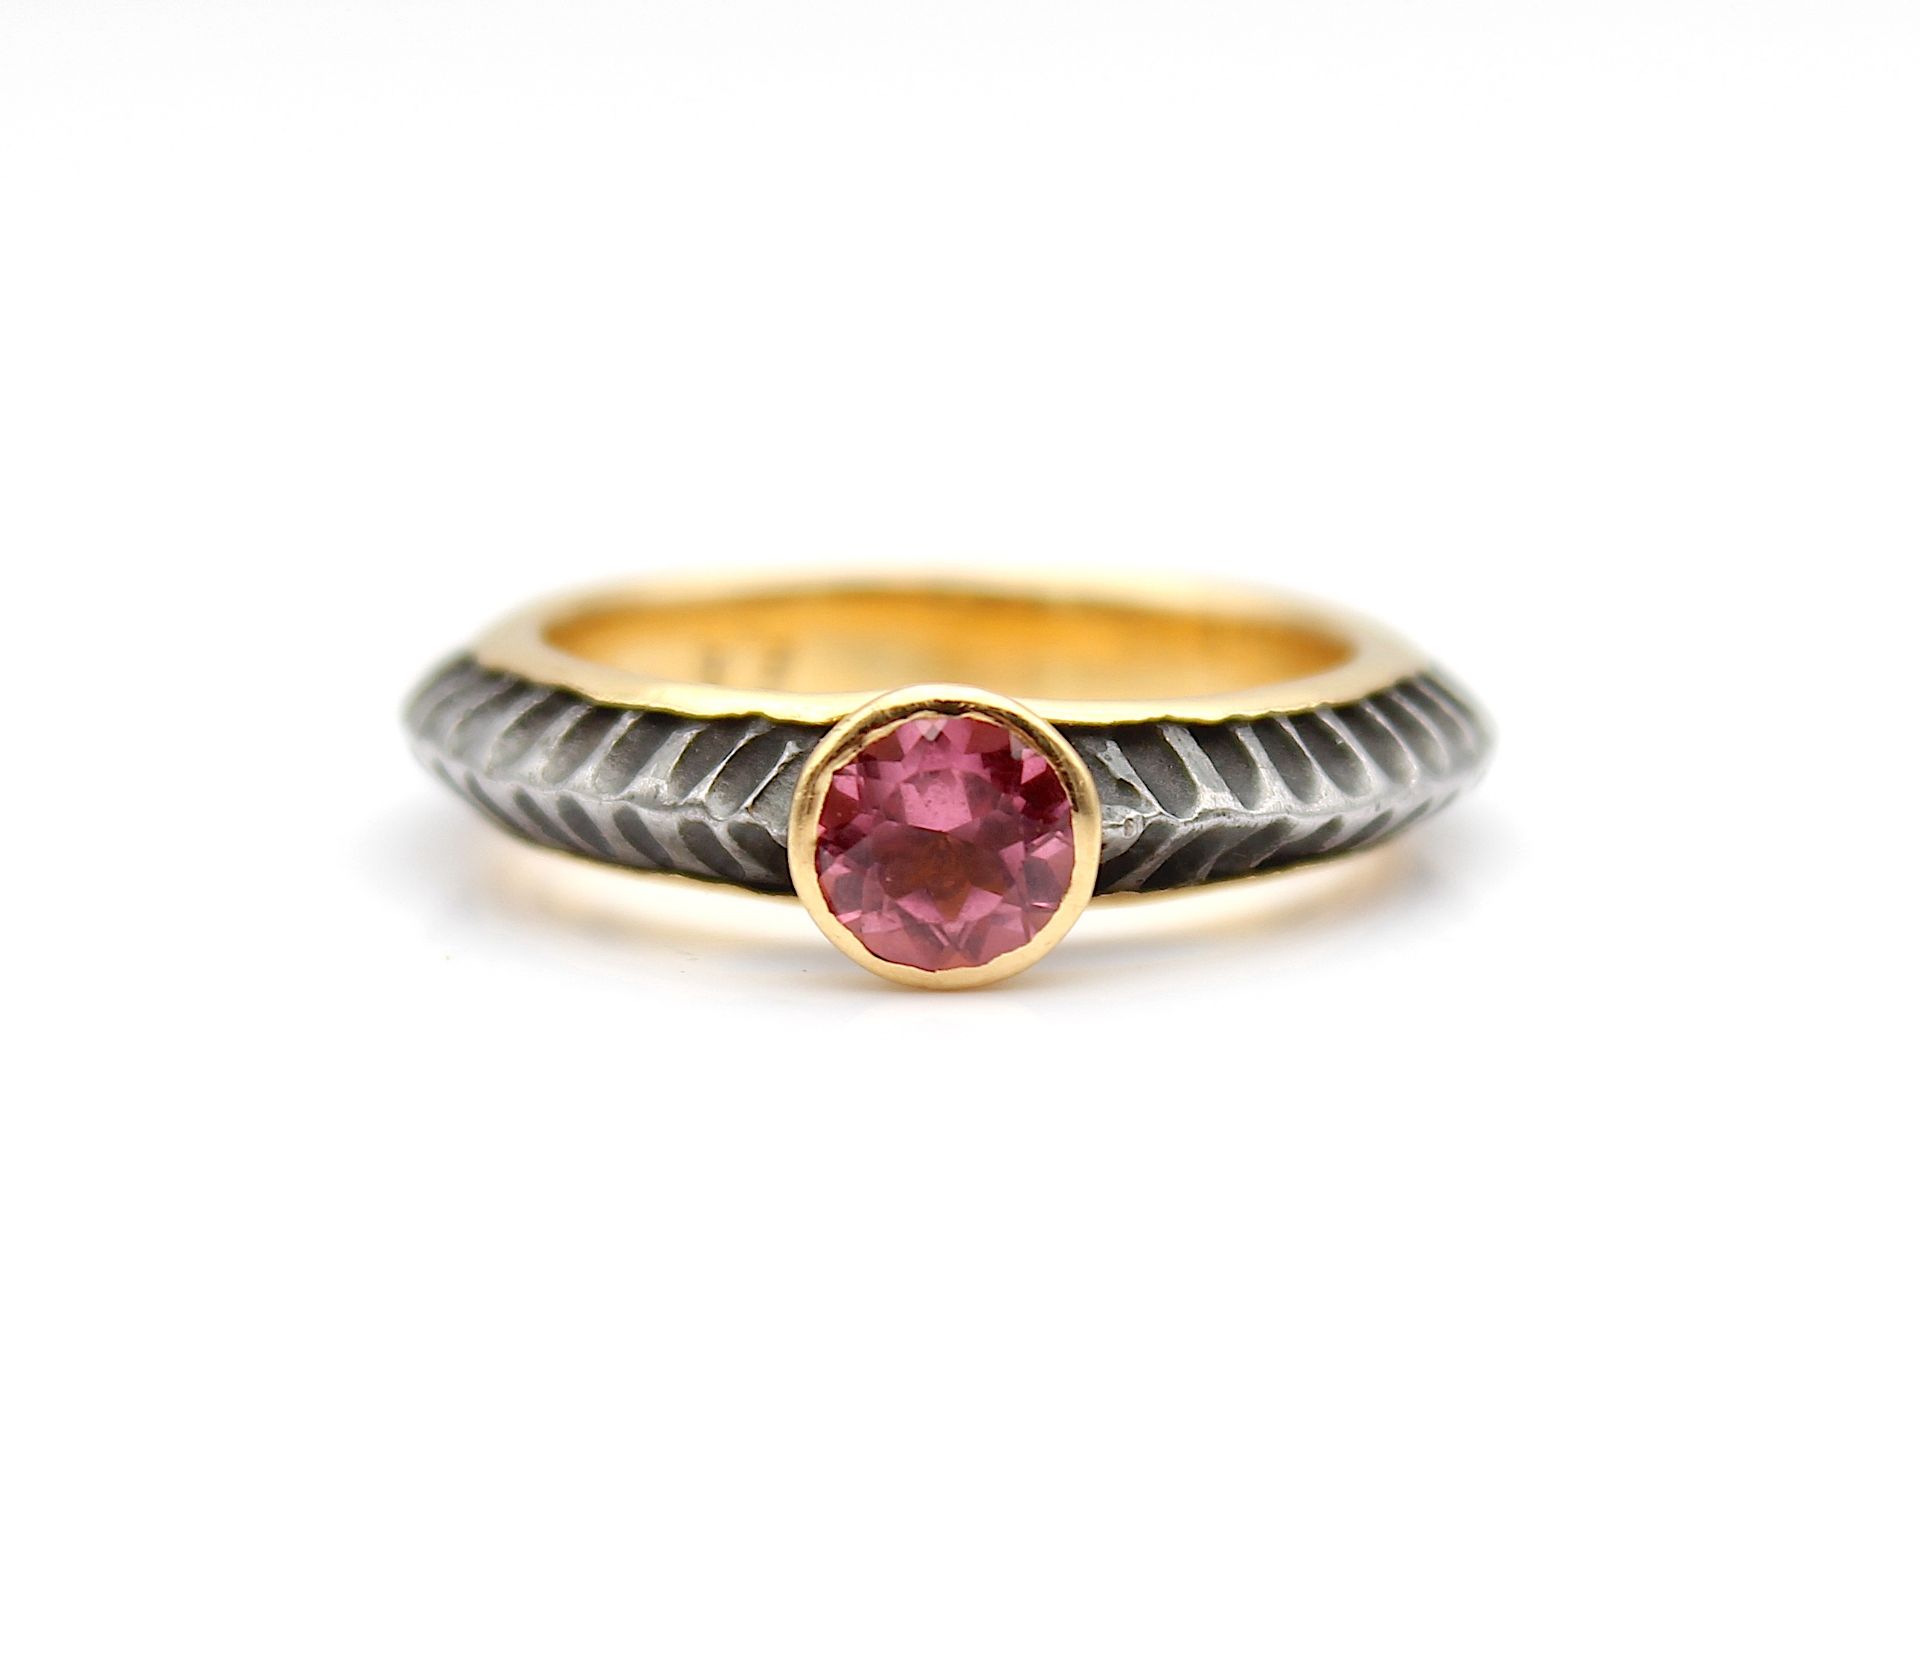 Stylish gold and iron ring with pink tourmaline